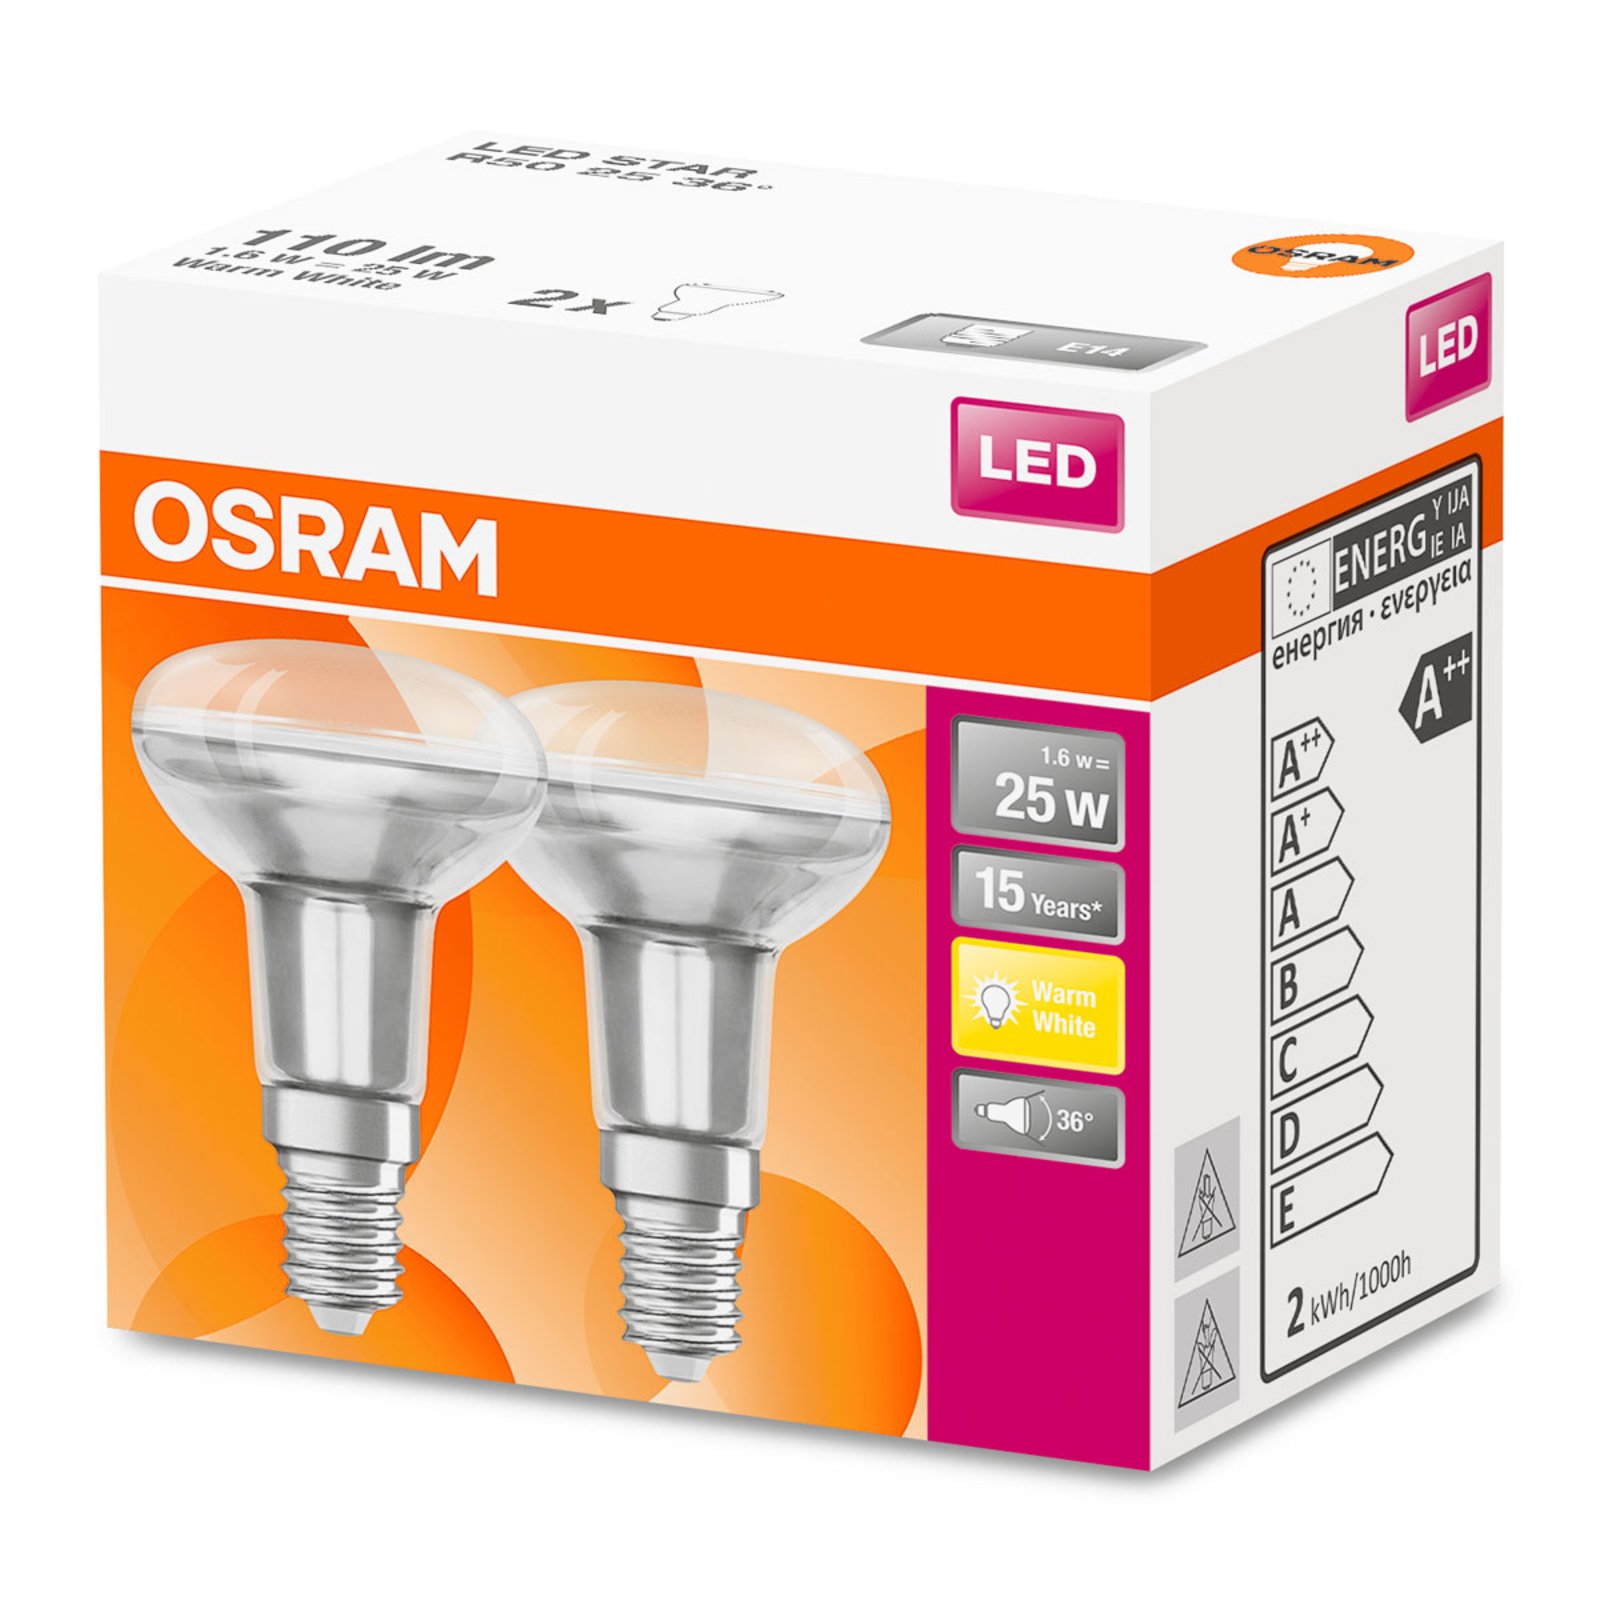 OSRAM LED reflectorlamp E14R50 1,6W 2700K 2 pak